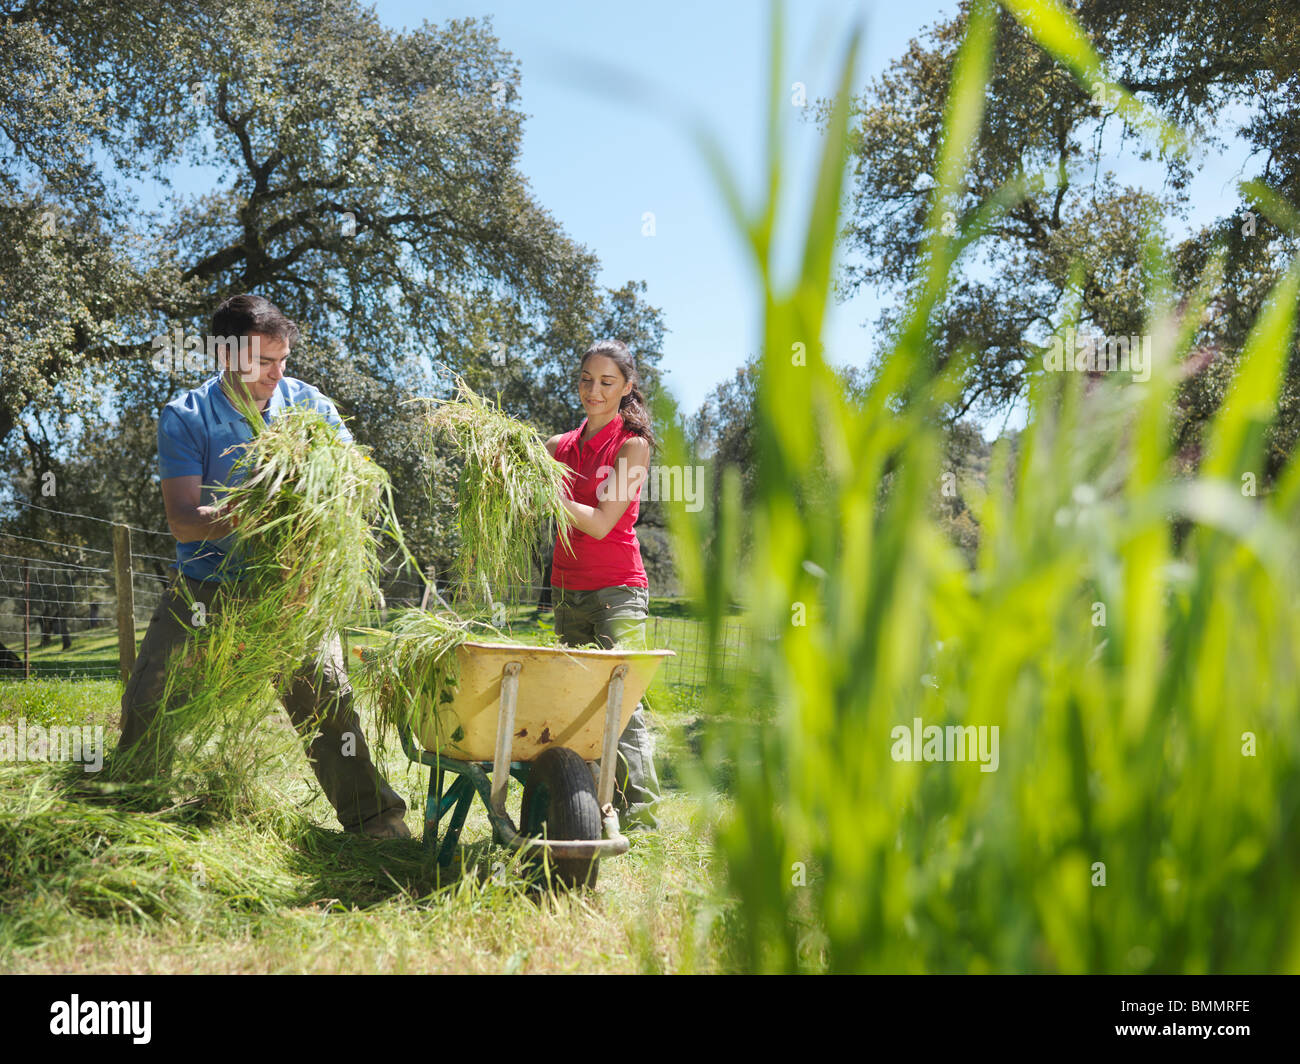 Man and woman putting hay in wheelbarrow Stock Photo